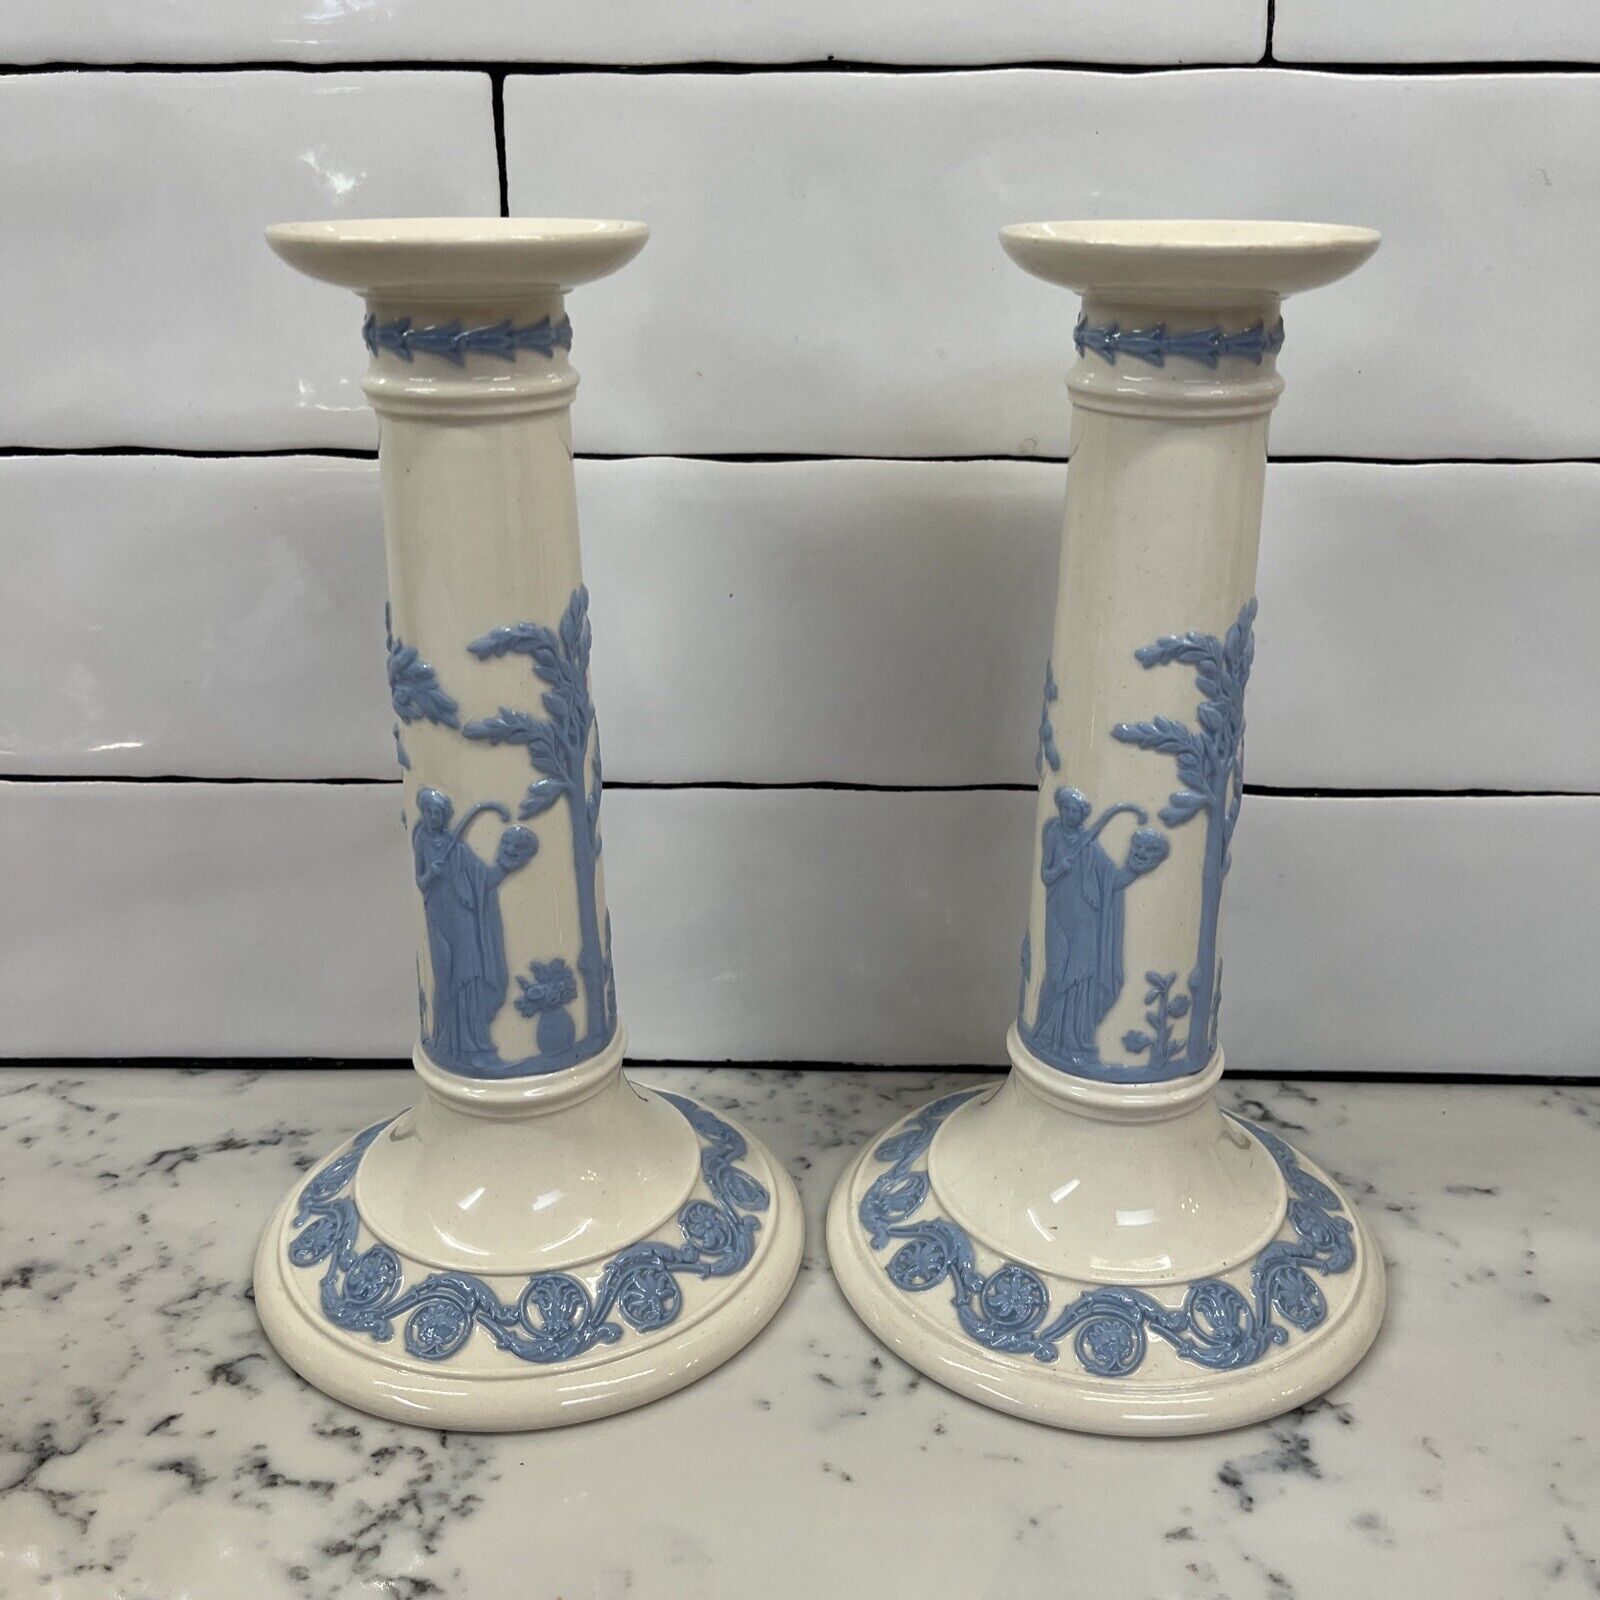 Vintage Pair Of 8” Candlestick Holders English Wedgwood Style Porcelain